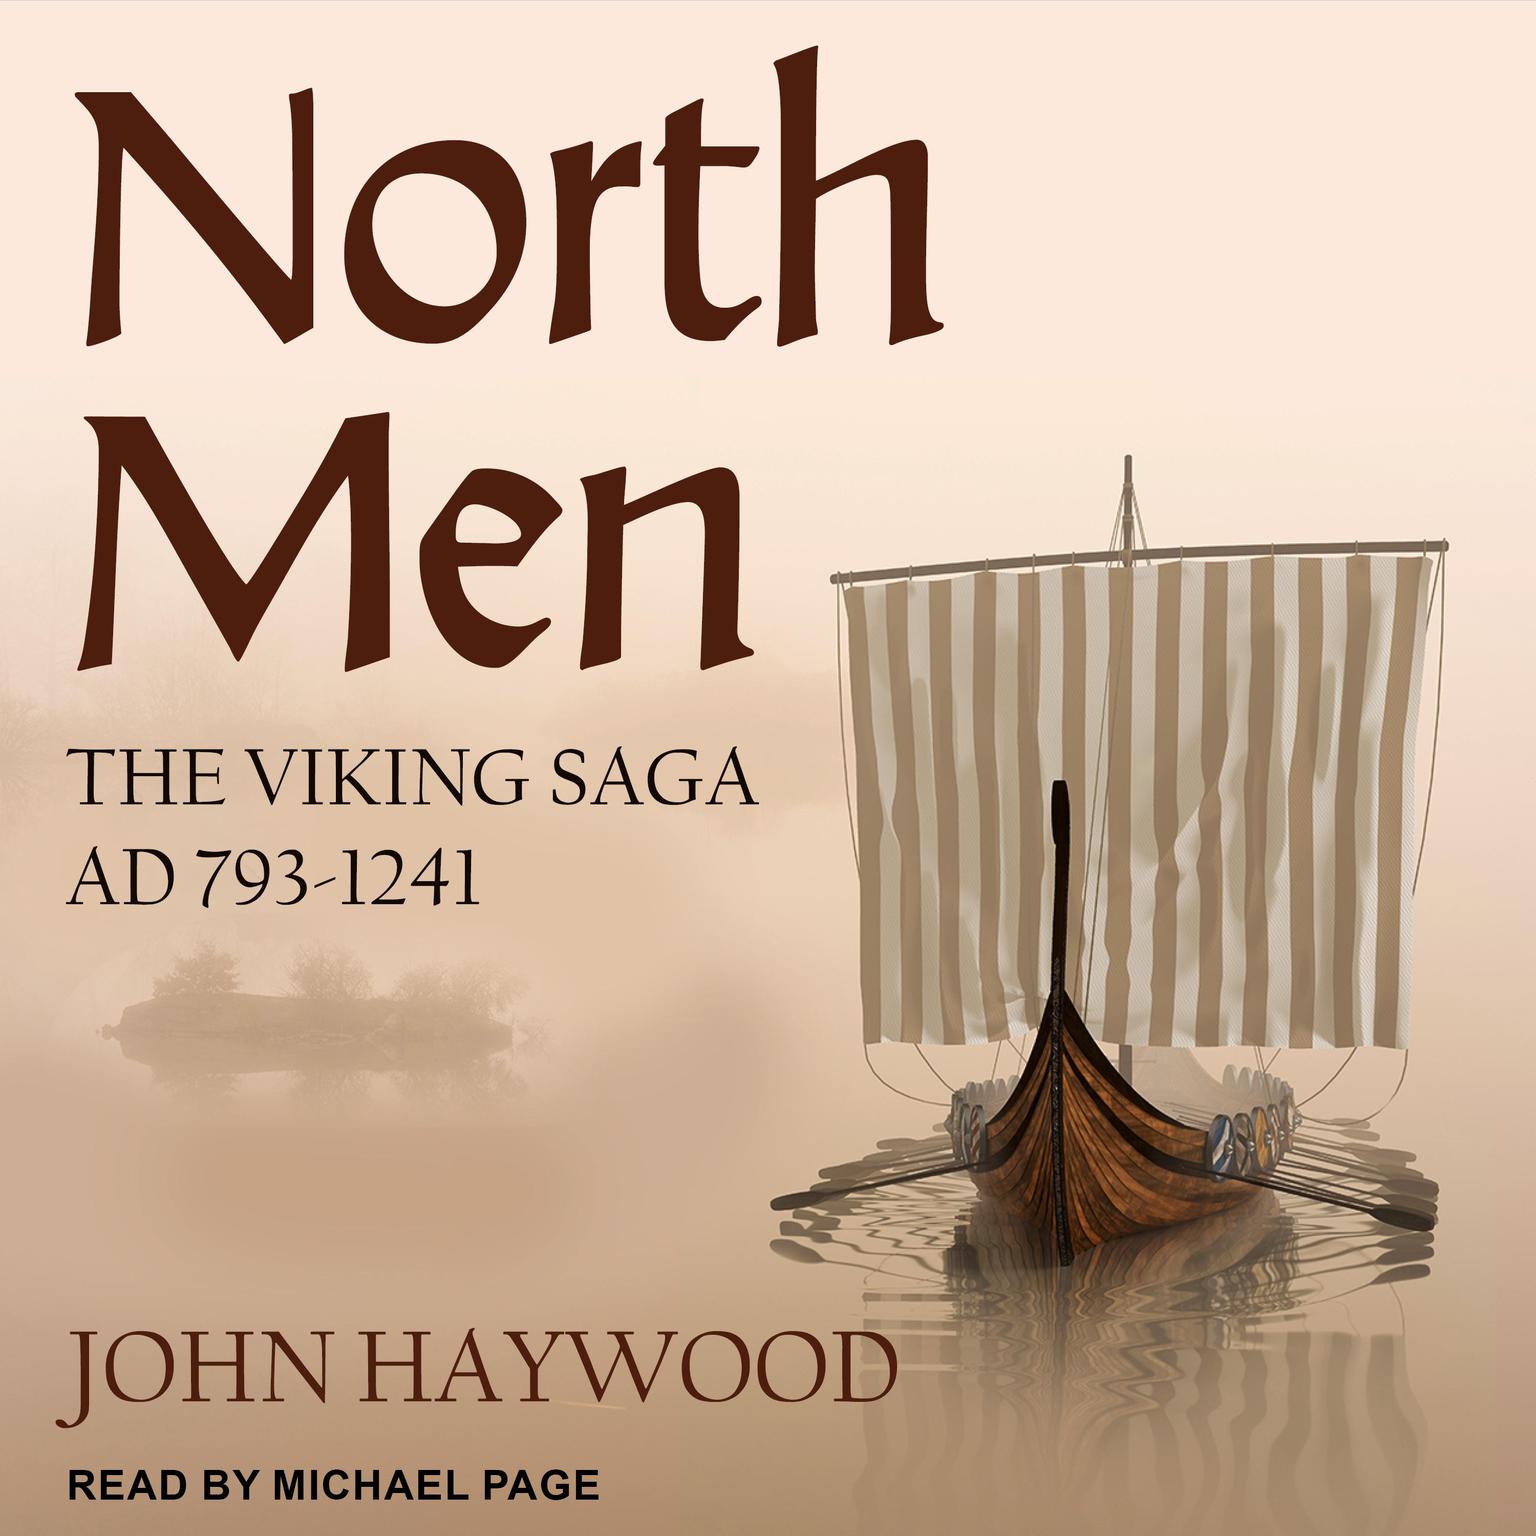 Northmen: The Viking Saga AD 793-1241 Audiobook, by John Haywood